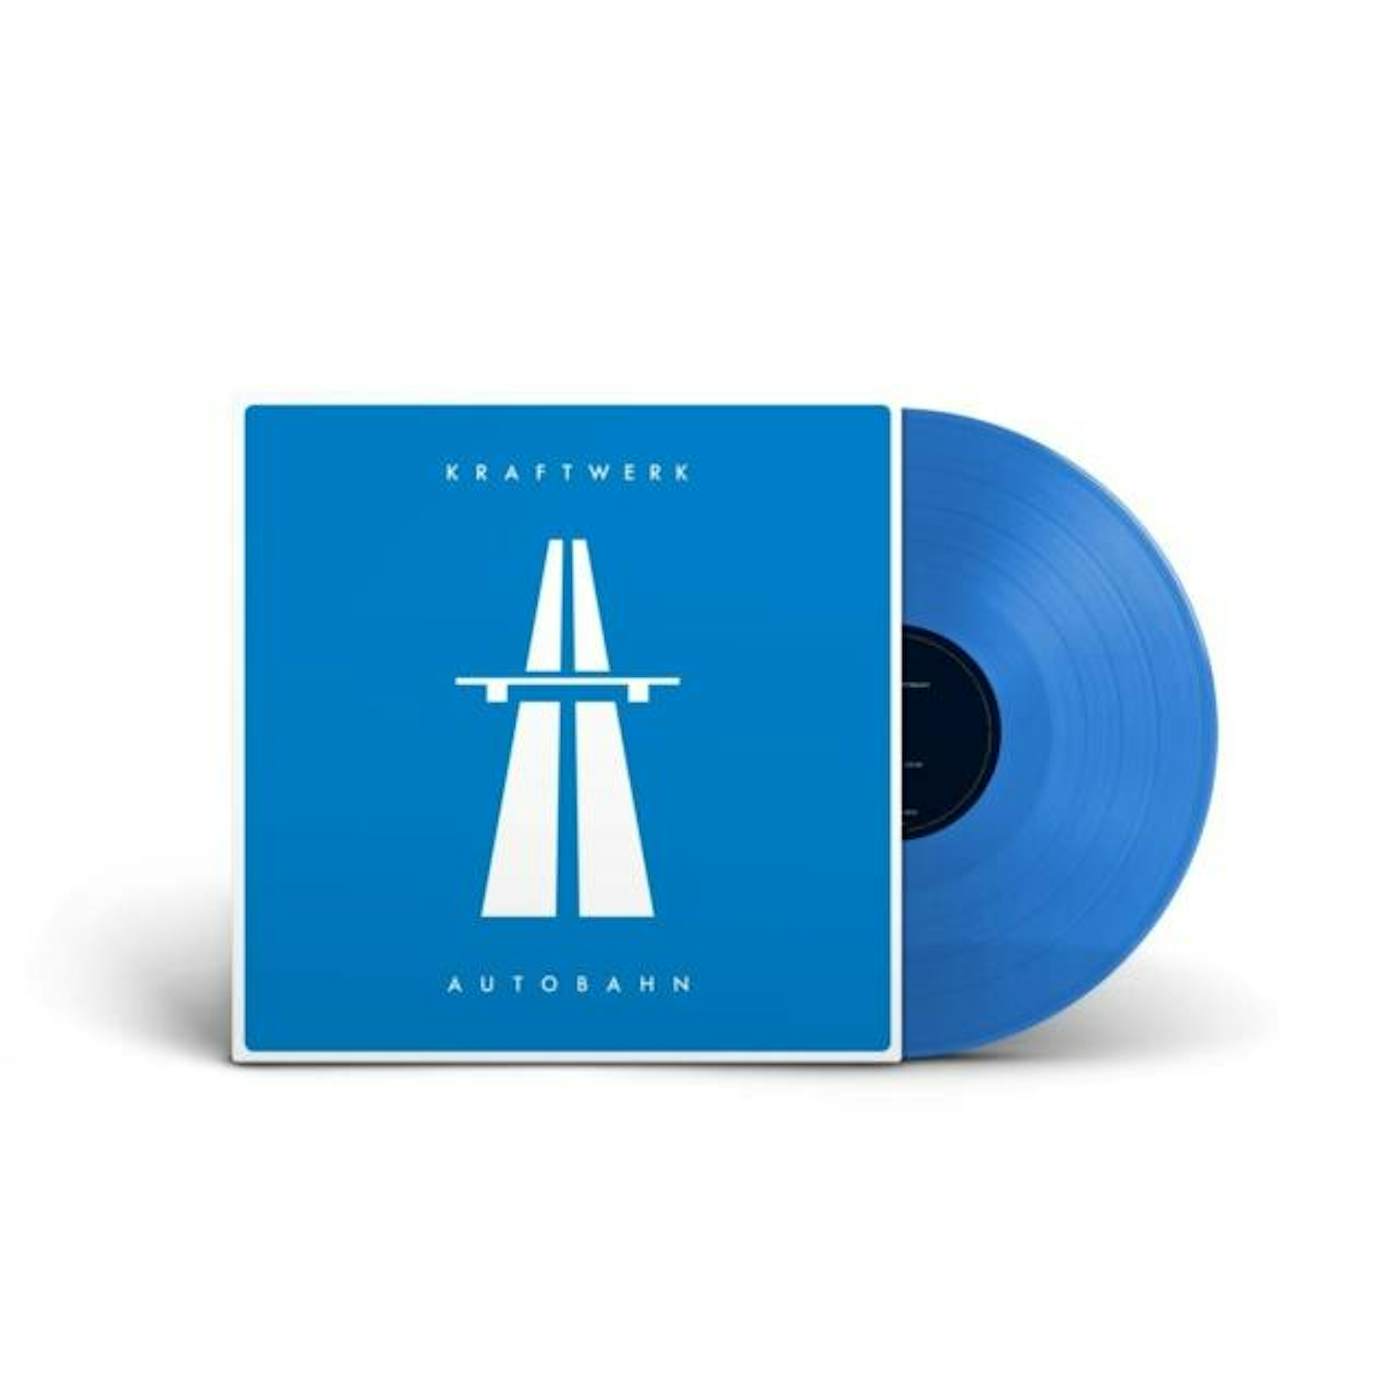 Kraftwerk LP Vinyl Record - Autobahn (Coloured Vinyl)